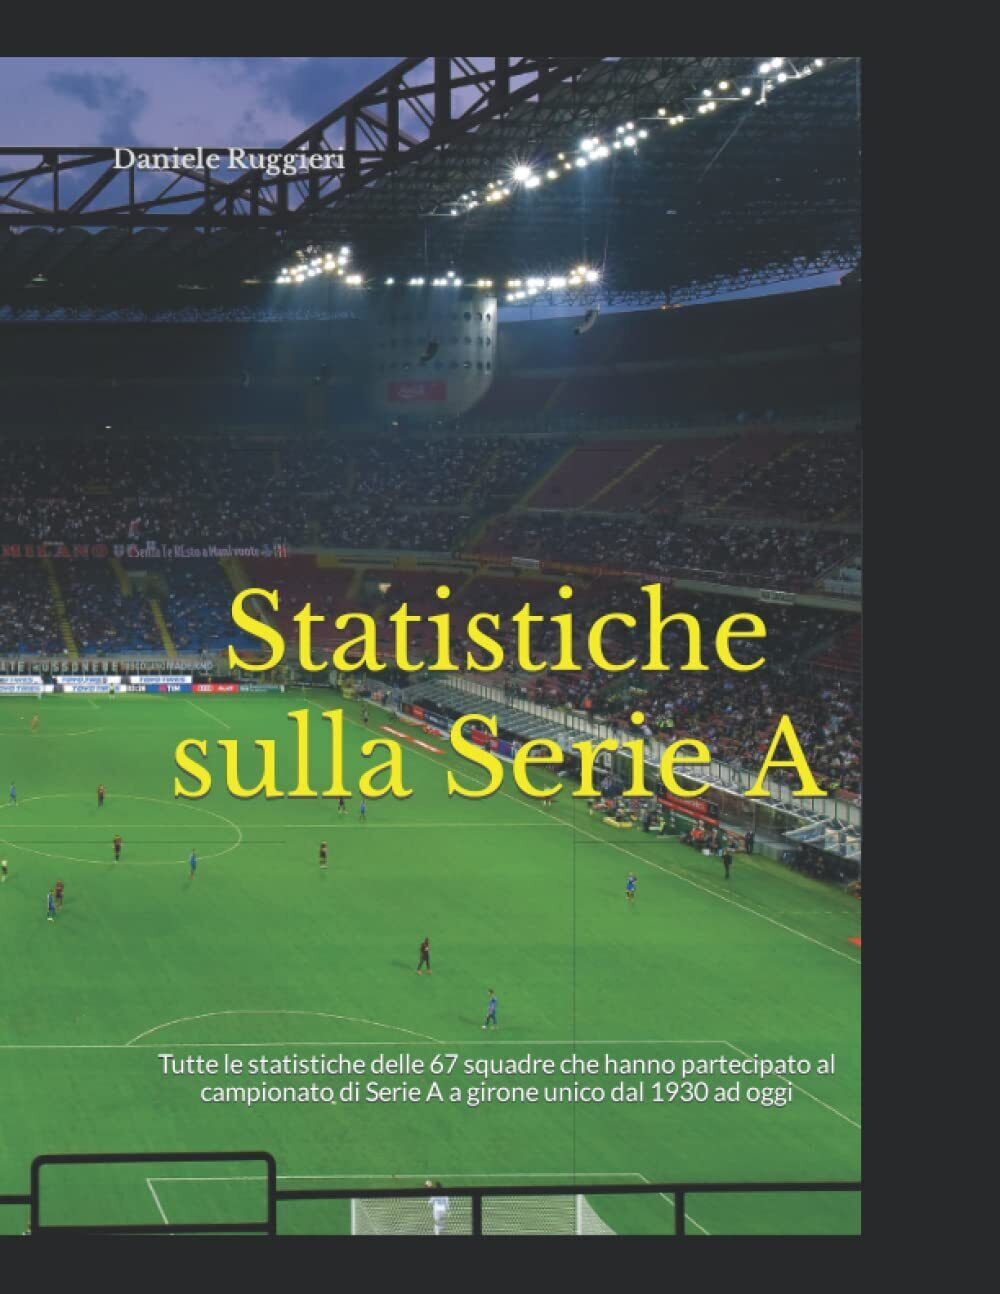 Statistiche sulla Serie A - Daniele Ruggieri - Independently published, 2021